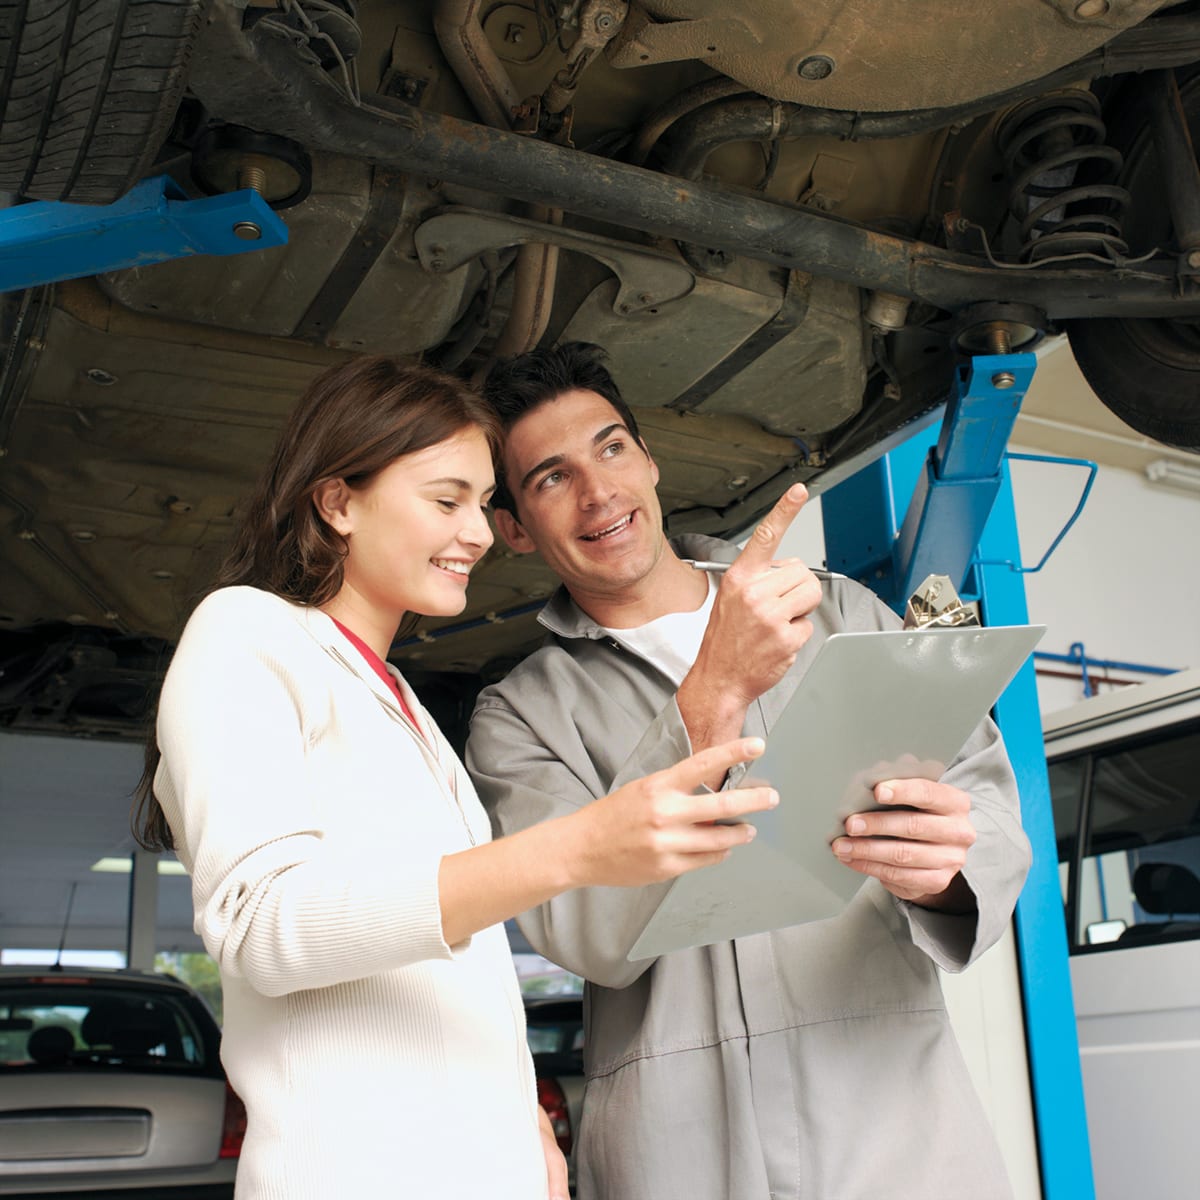 Mechanic and customer